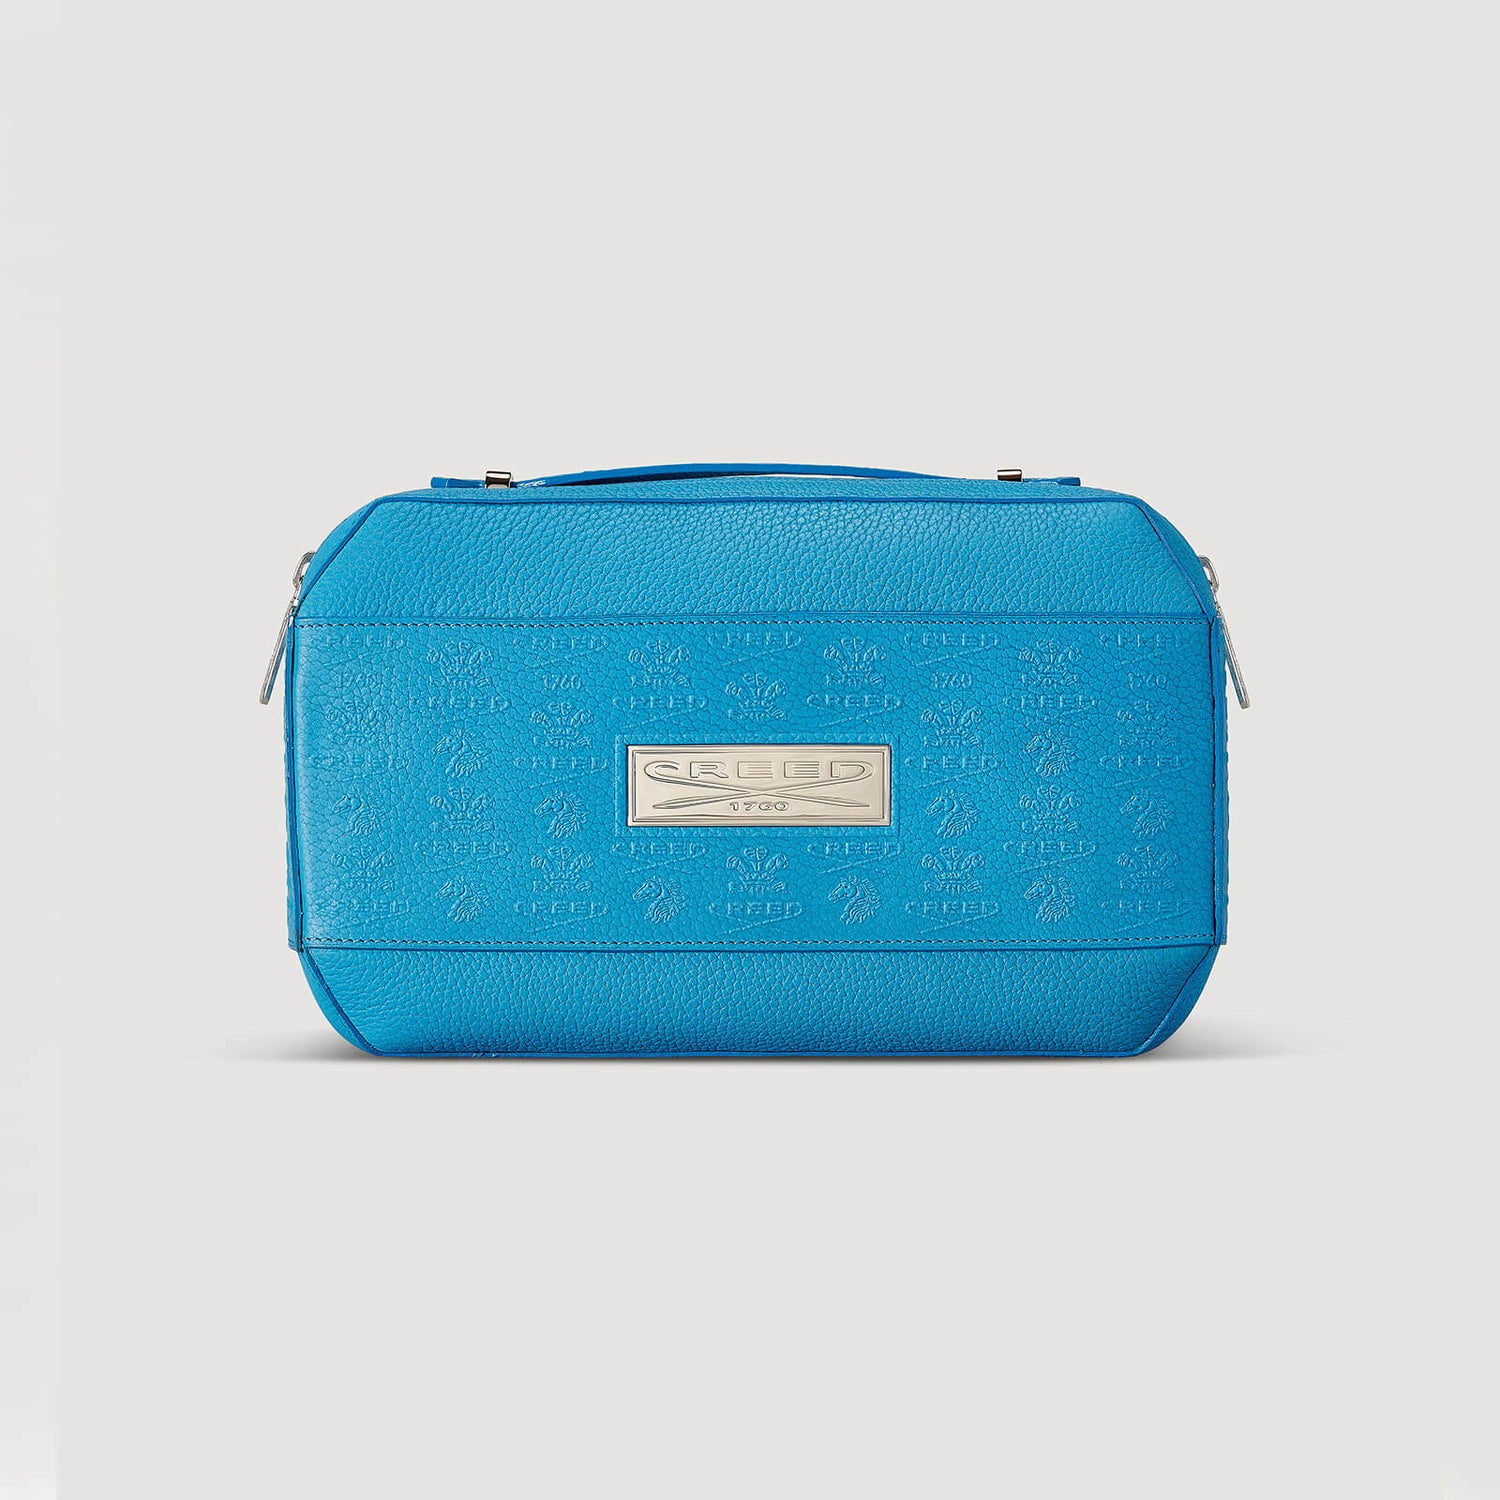 Prada Vitello Daino Leather Tote Bag Honest Review | I Make Leather Handbags